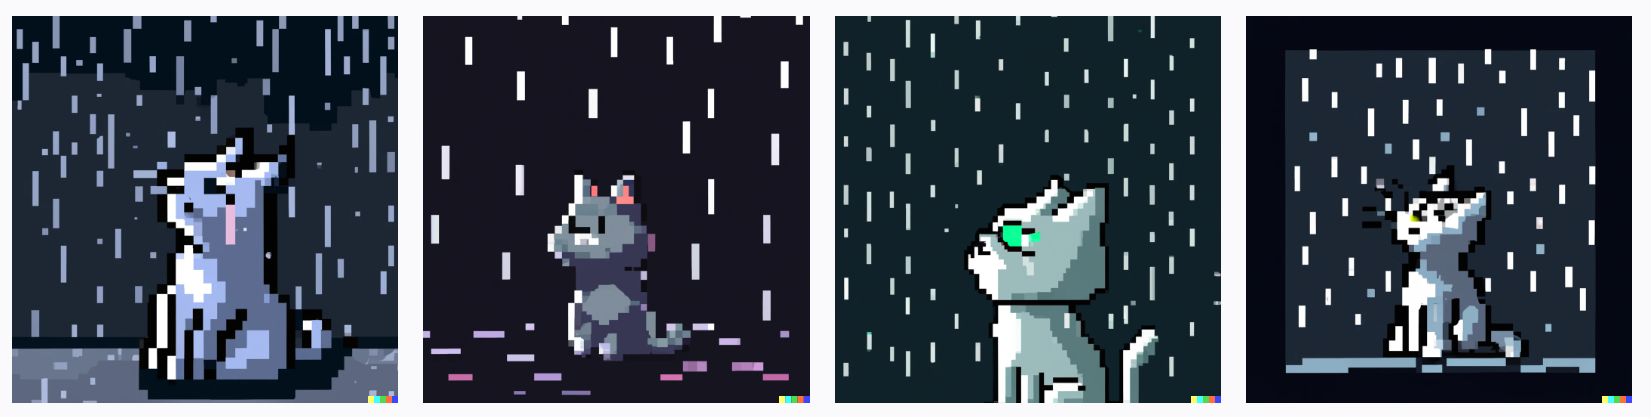 Pixel cat sit in the rain, digital art, pixel art, dark